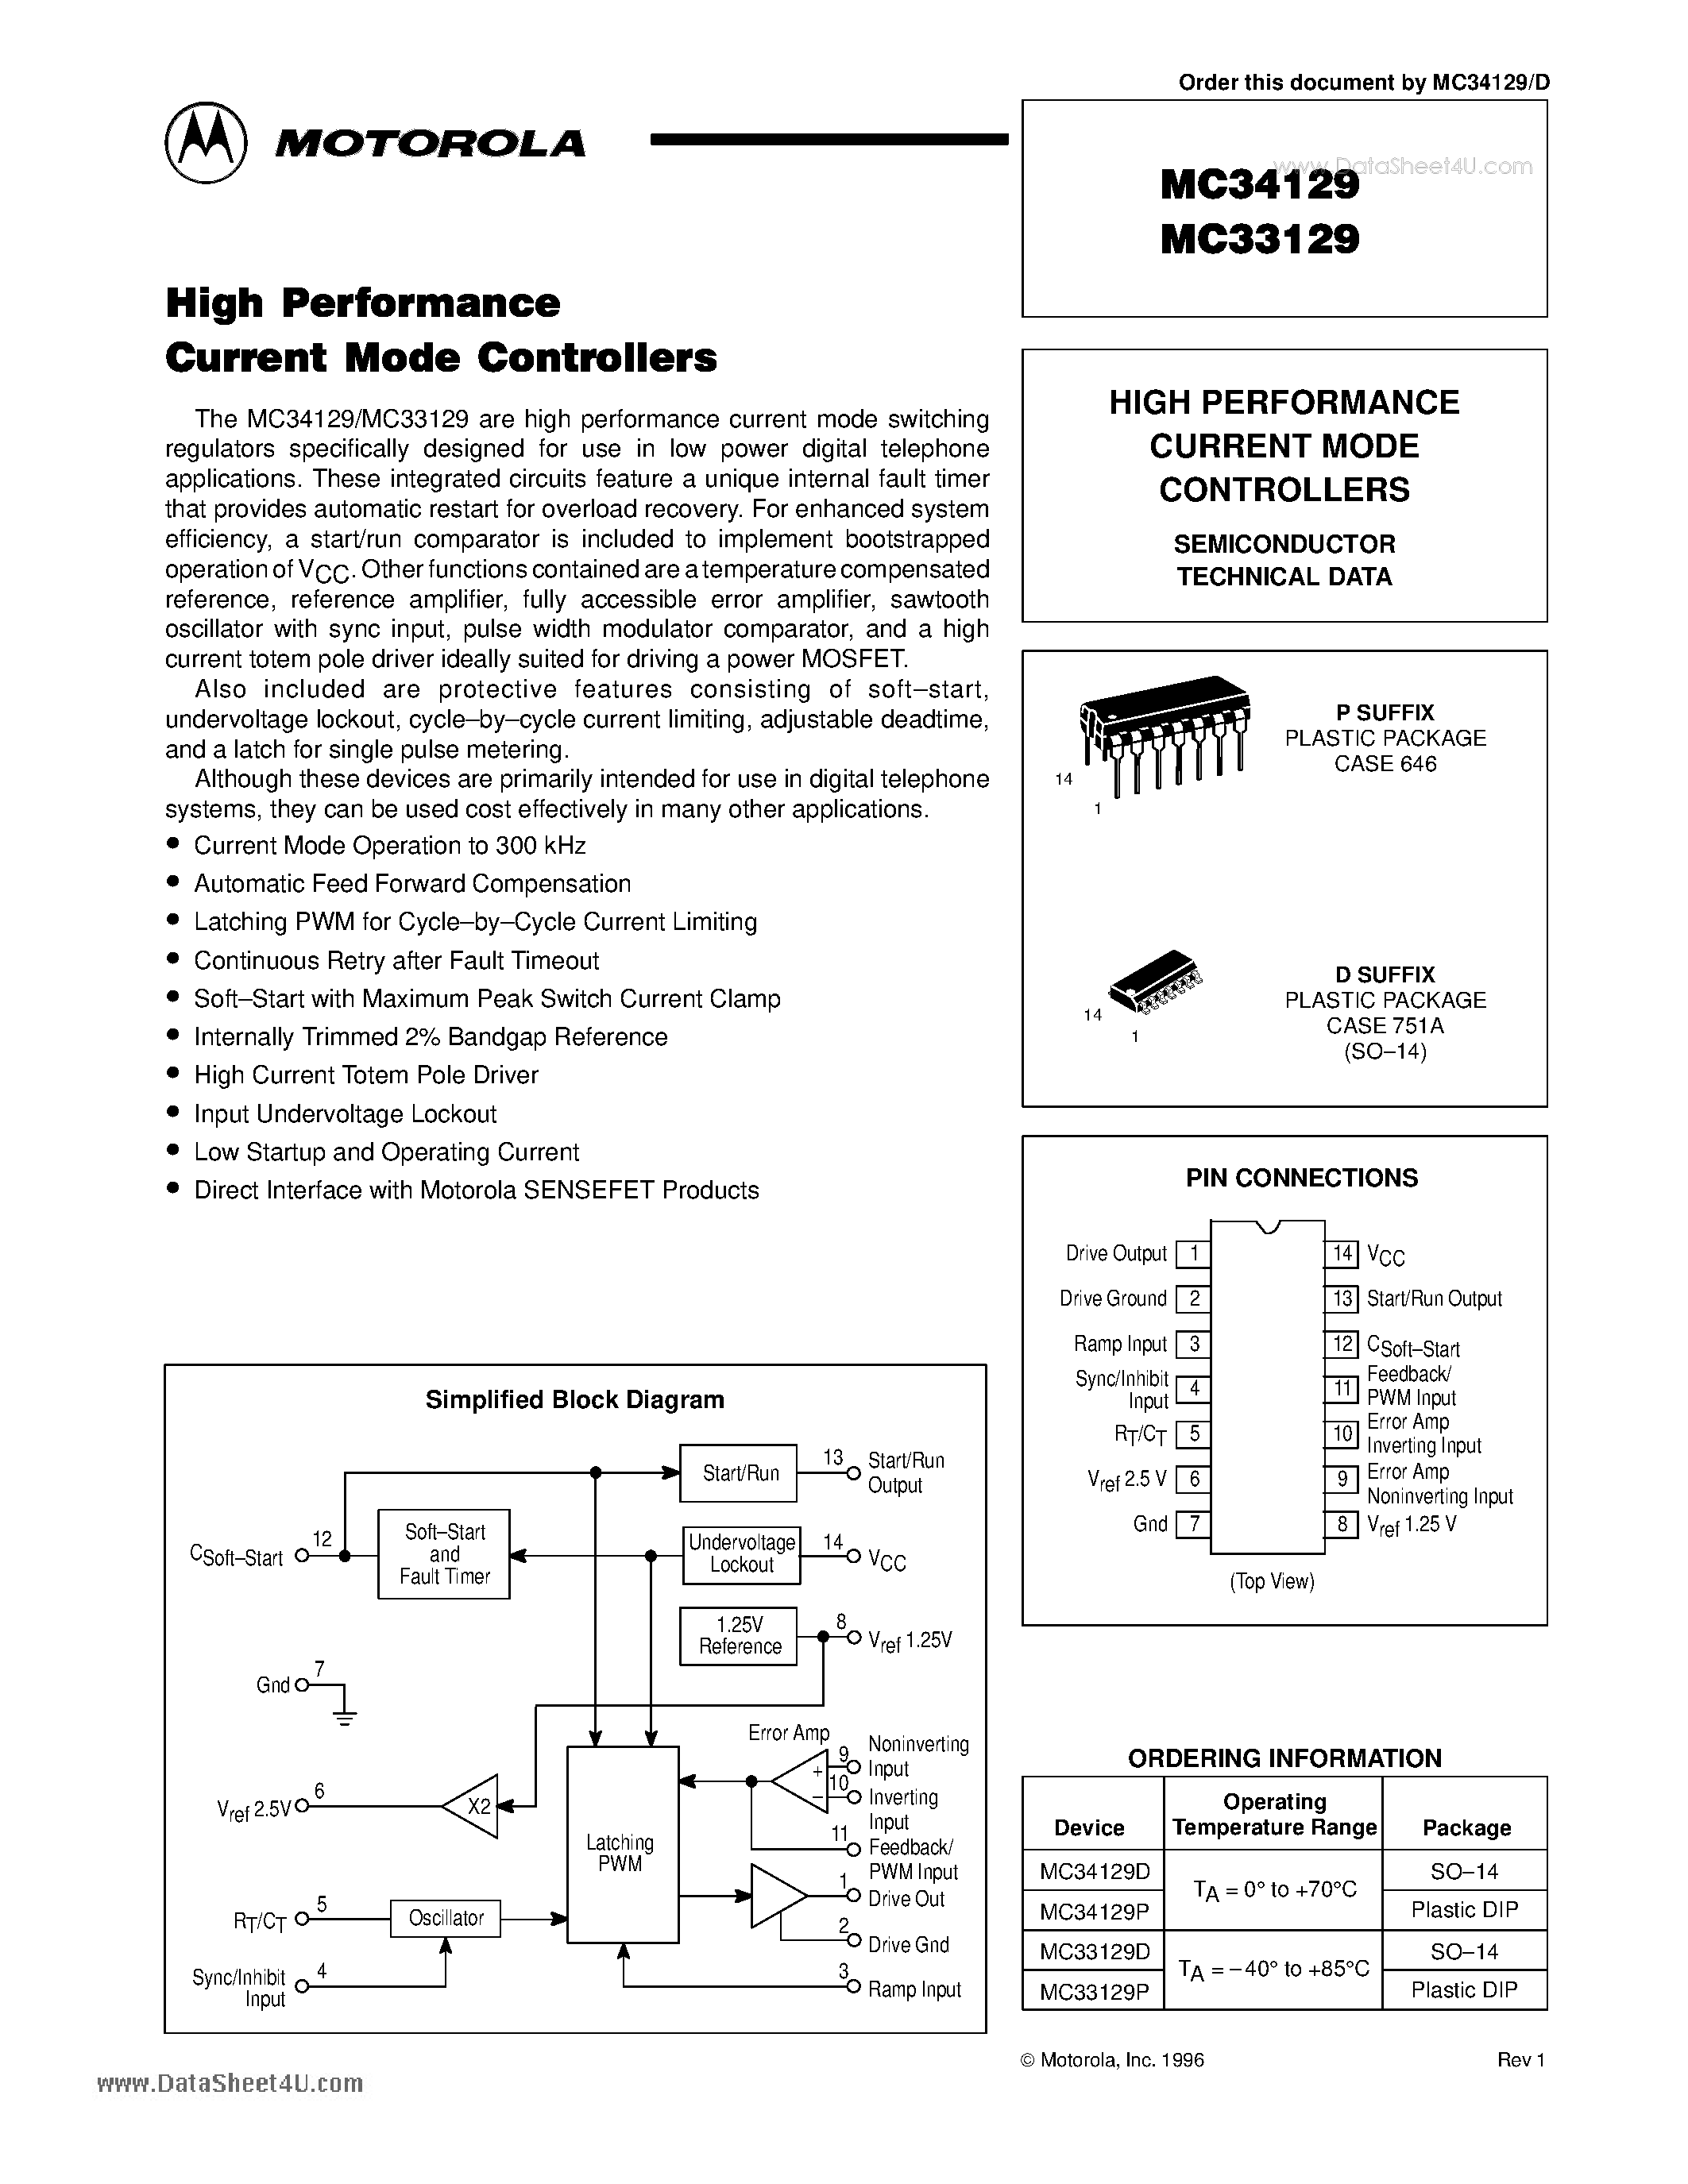 Datasheet MC34129 - (MC33129 / MC34129) High Performance Current Mode Controller page 1